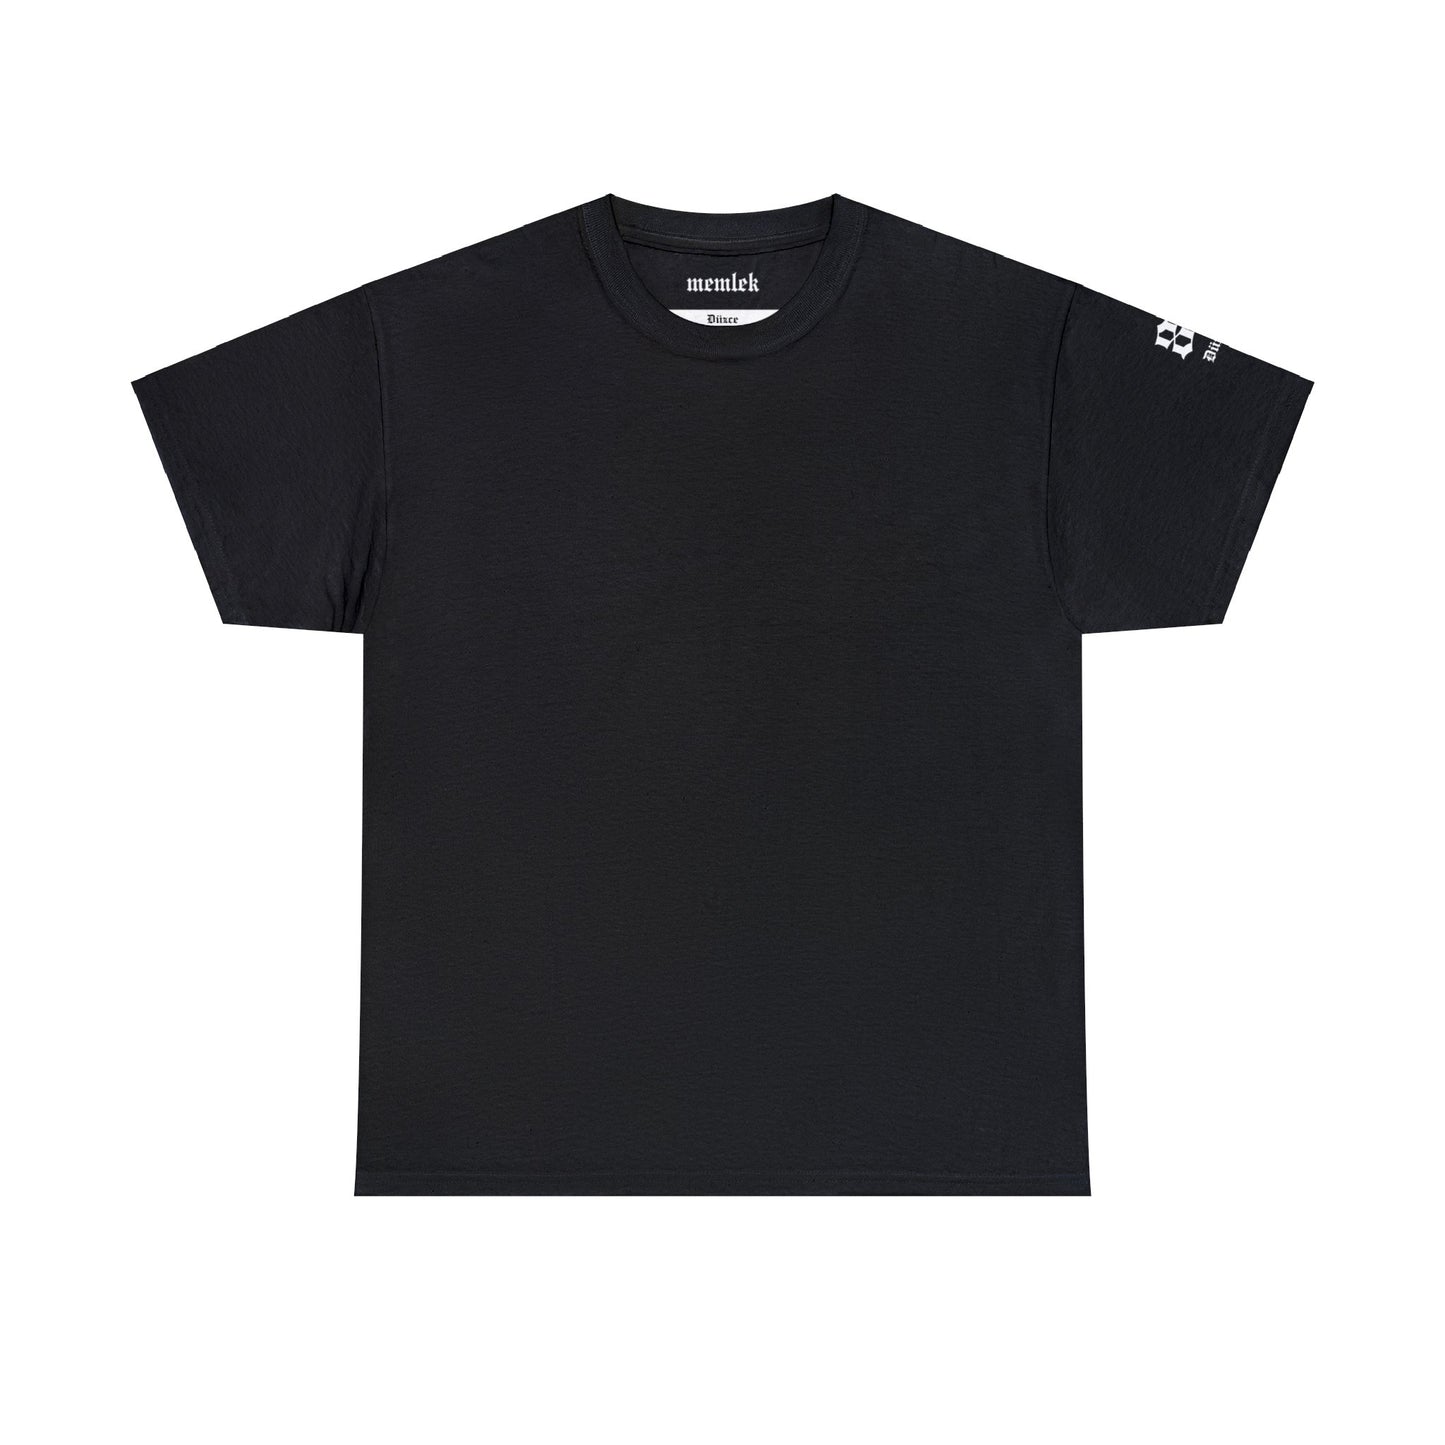 İlçem - 81 Düzce - T-Shirt - Back Print - Black